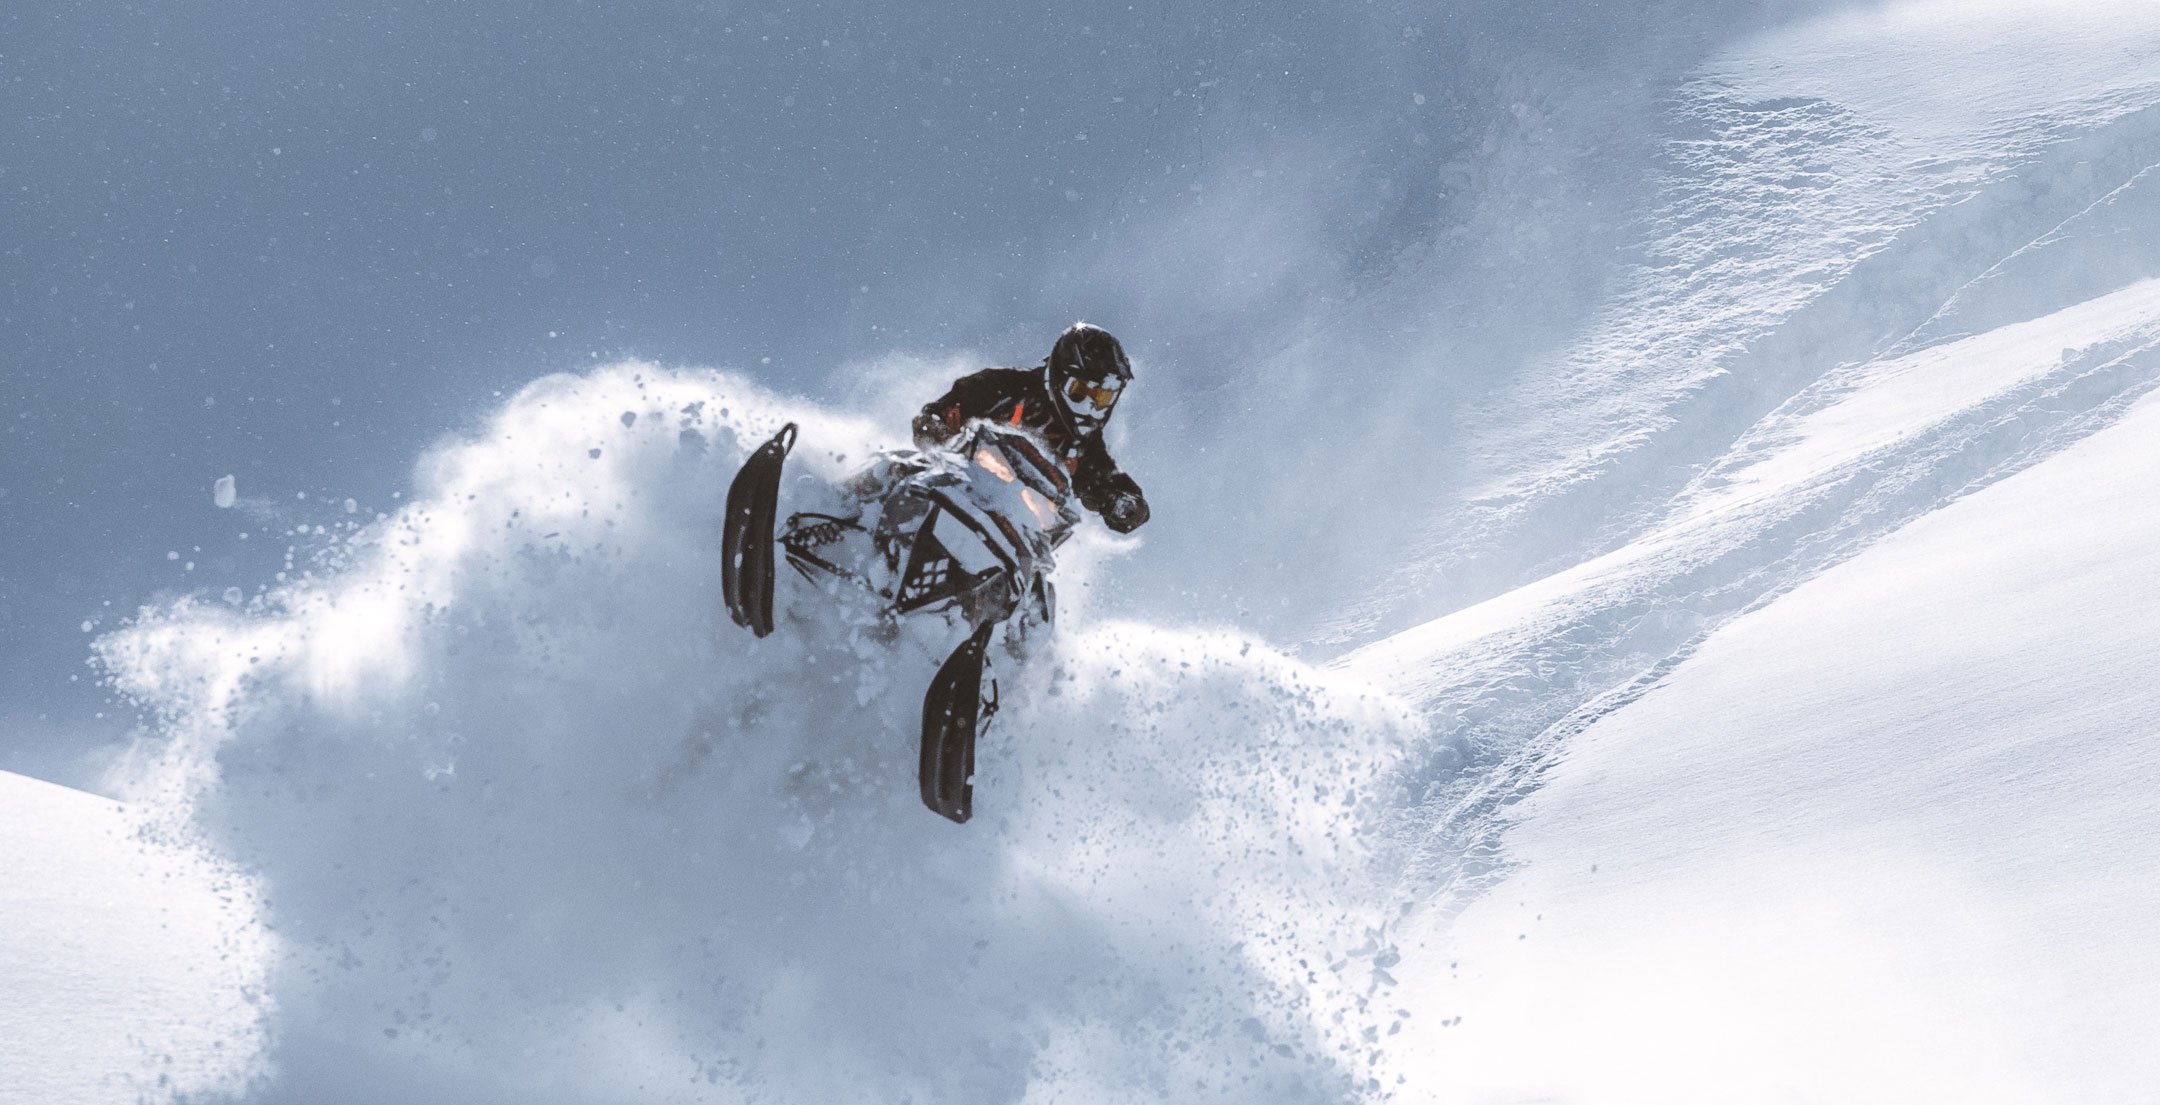 Ski-Doo Ambassador Cody McNolty jumping a cliff with his Ski-Doo snowmobile